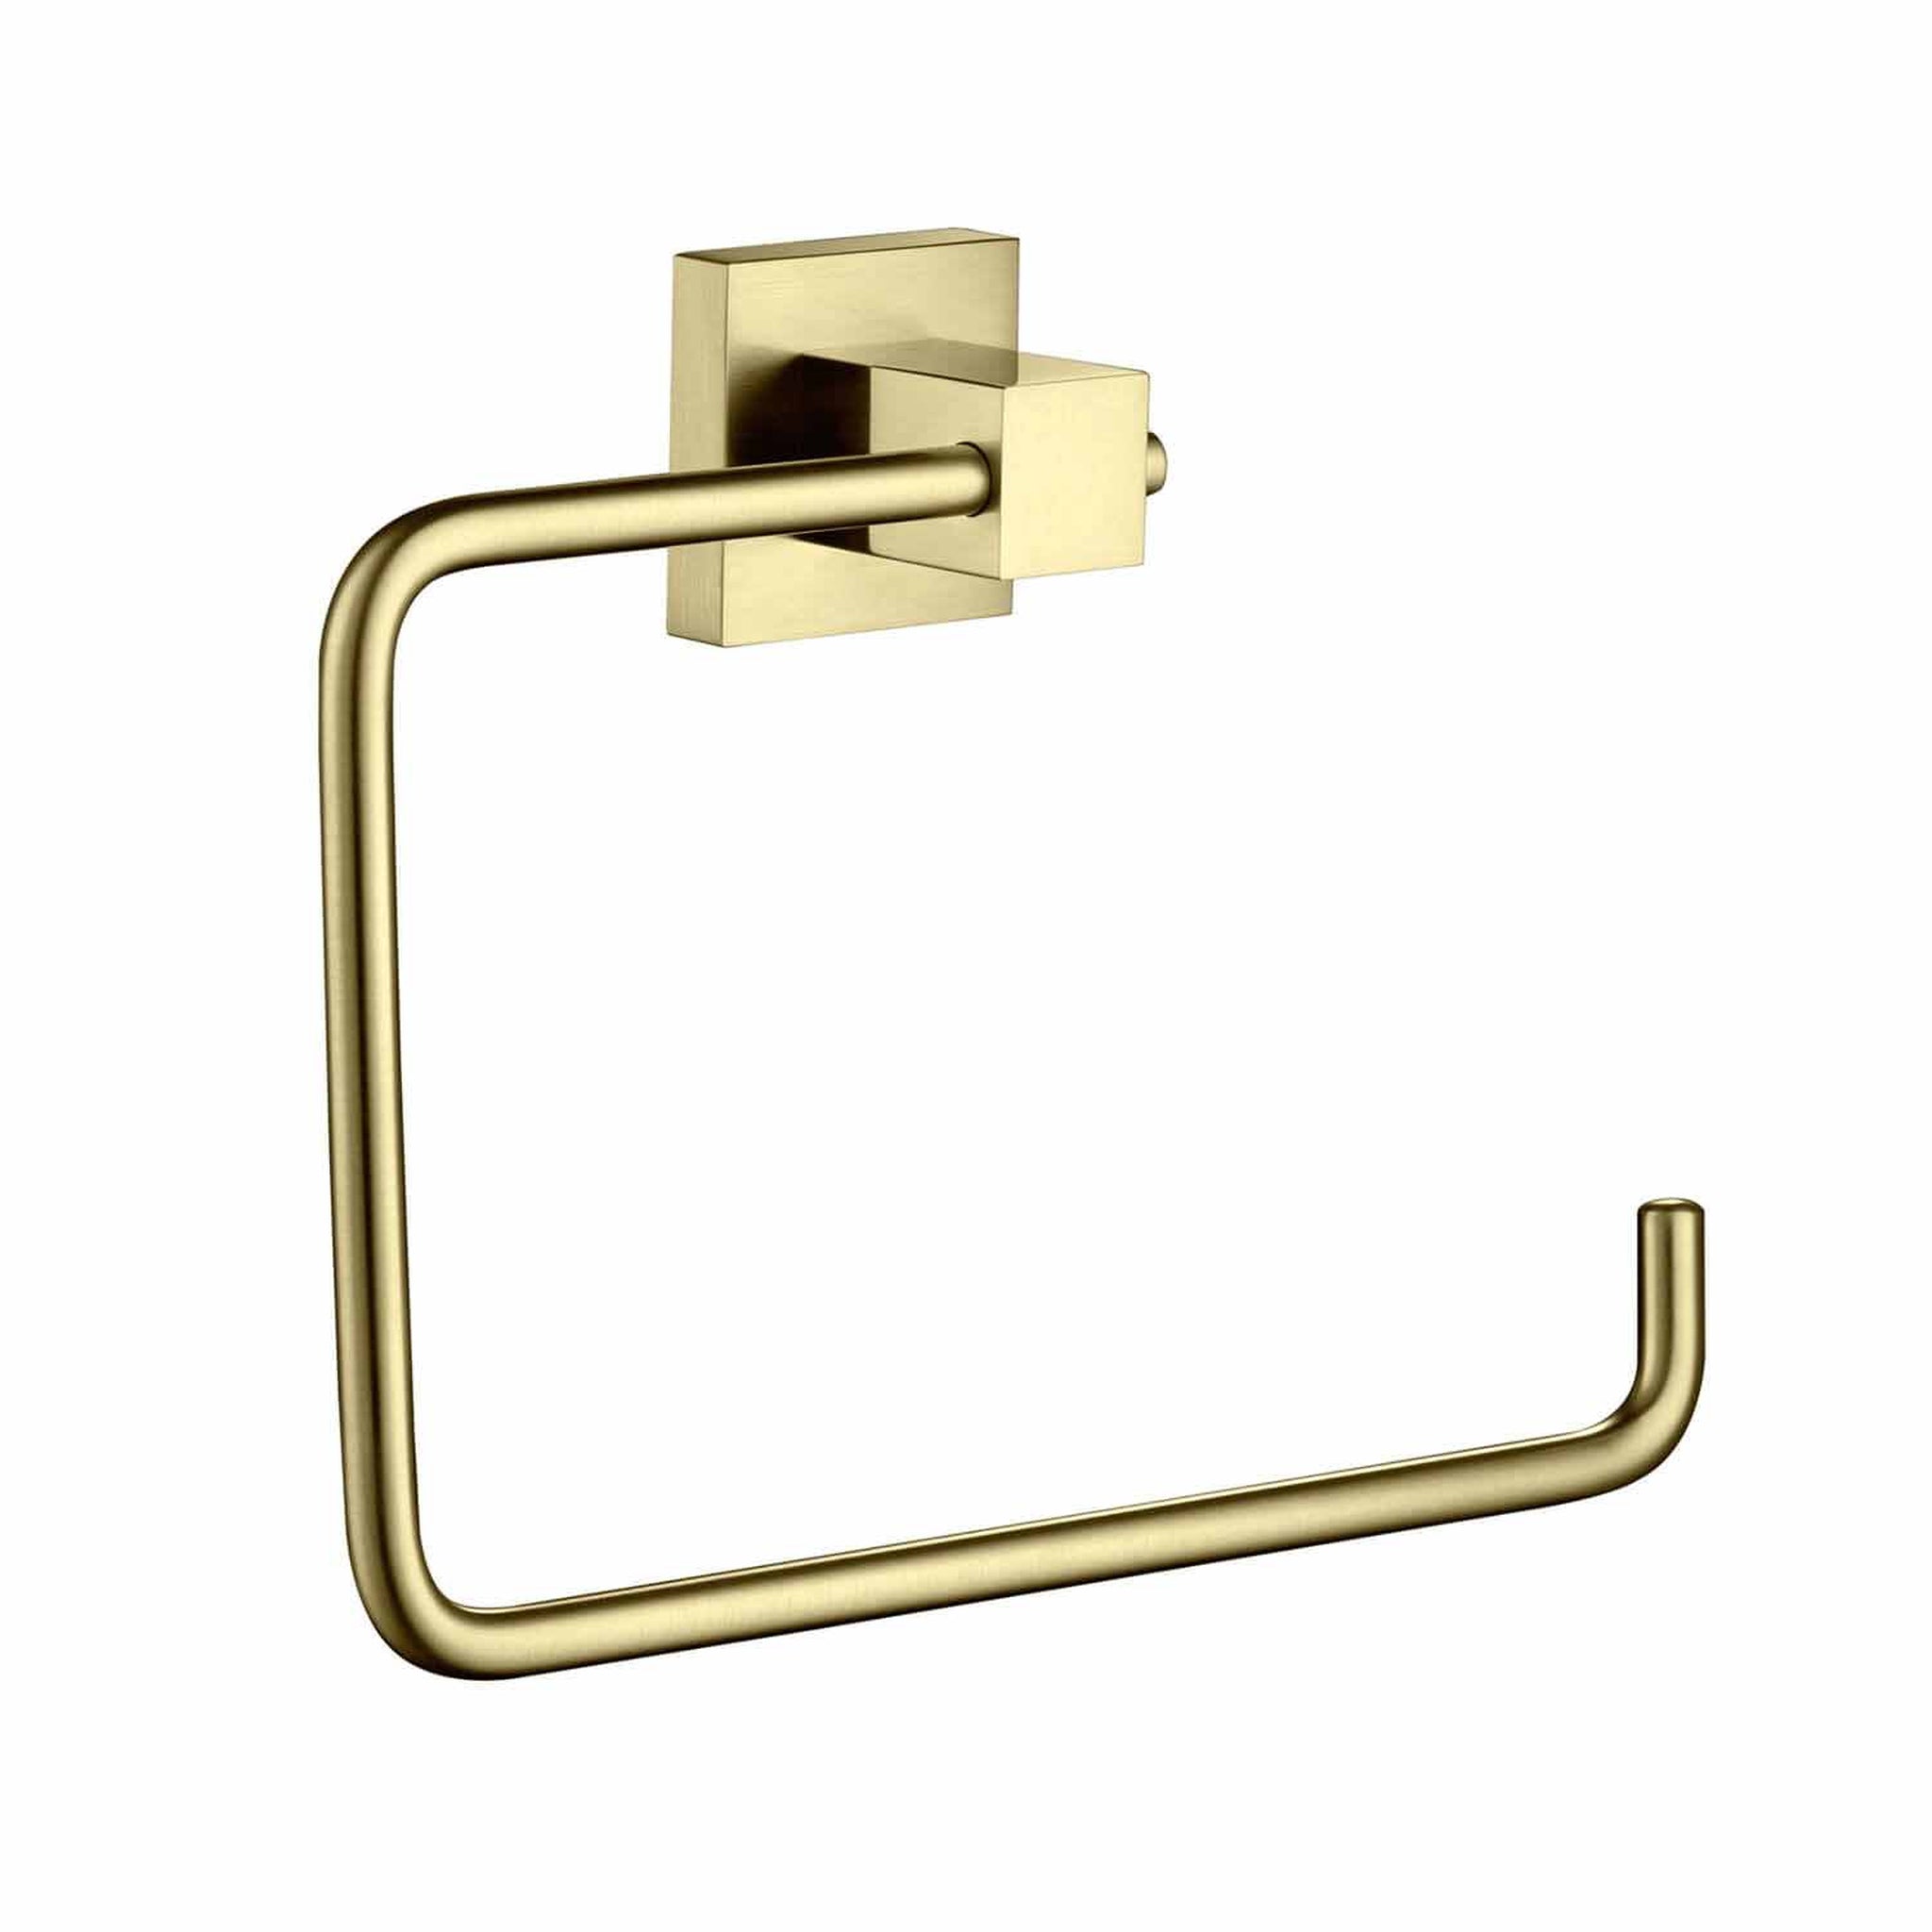 KIBI, KIBI Cube Brass Bathroom Towel Ring in Brushed Gold Finish